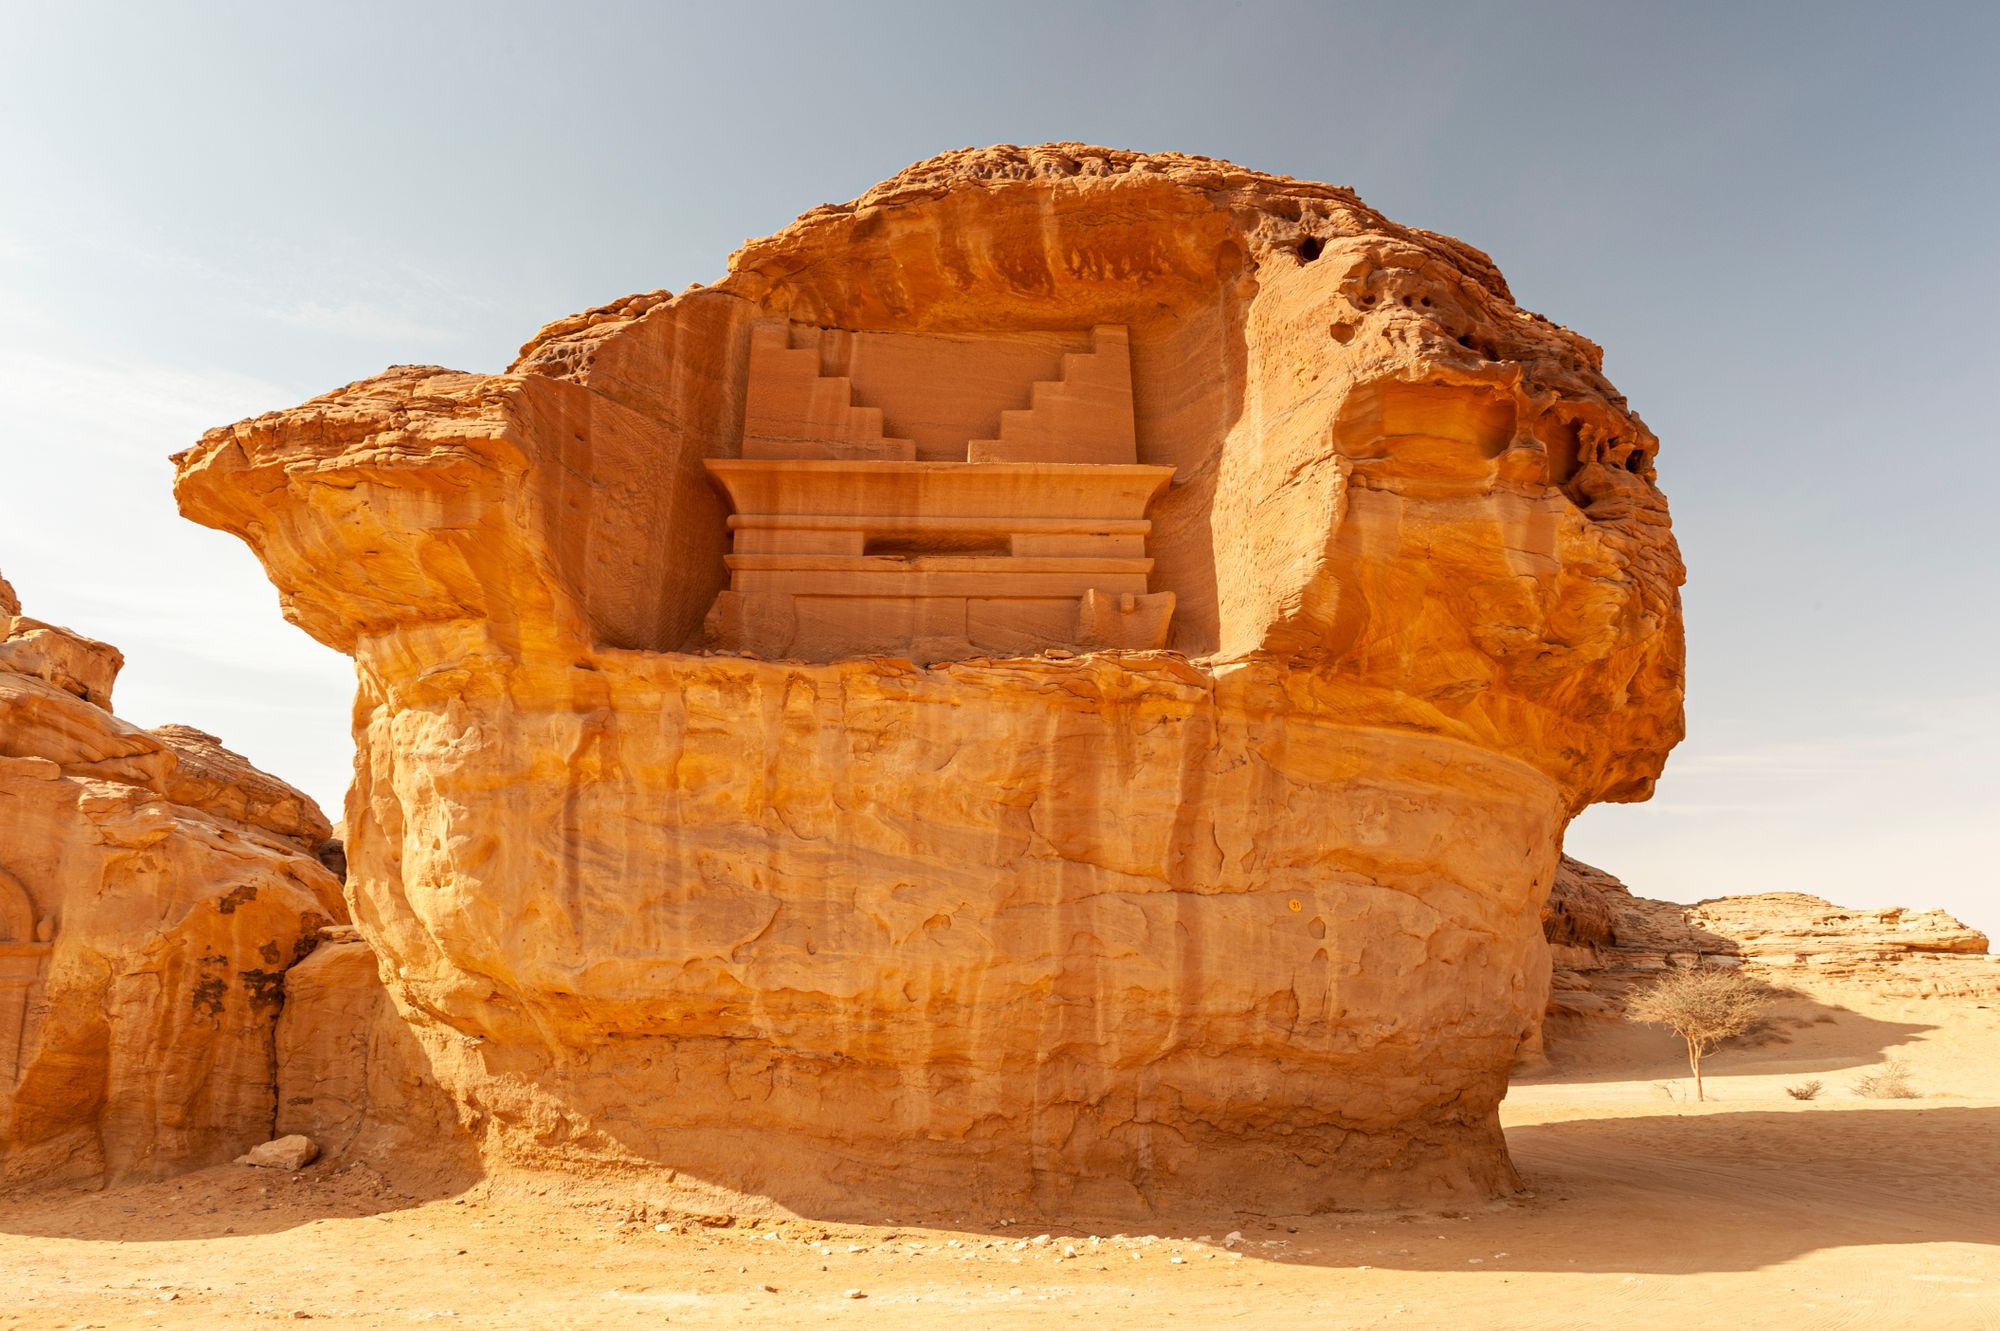 The rock-hewn tombs of Hegra